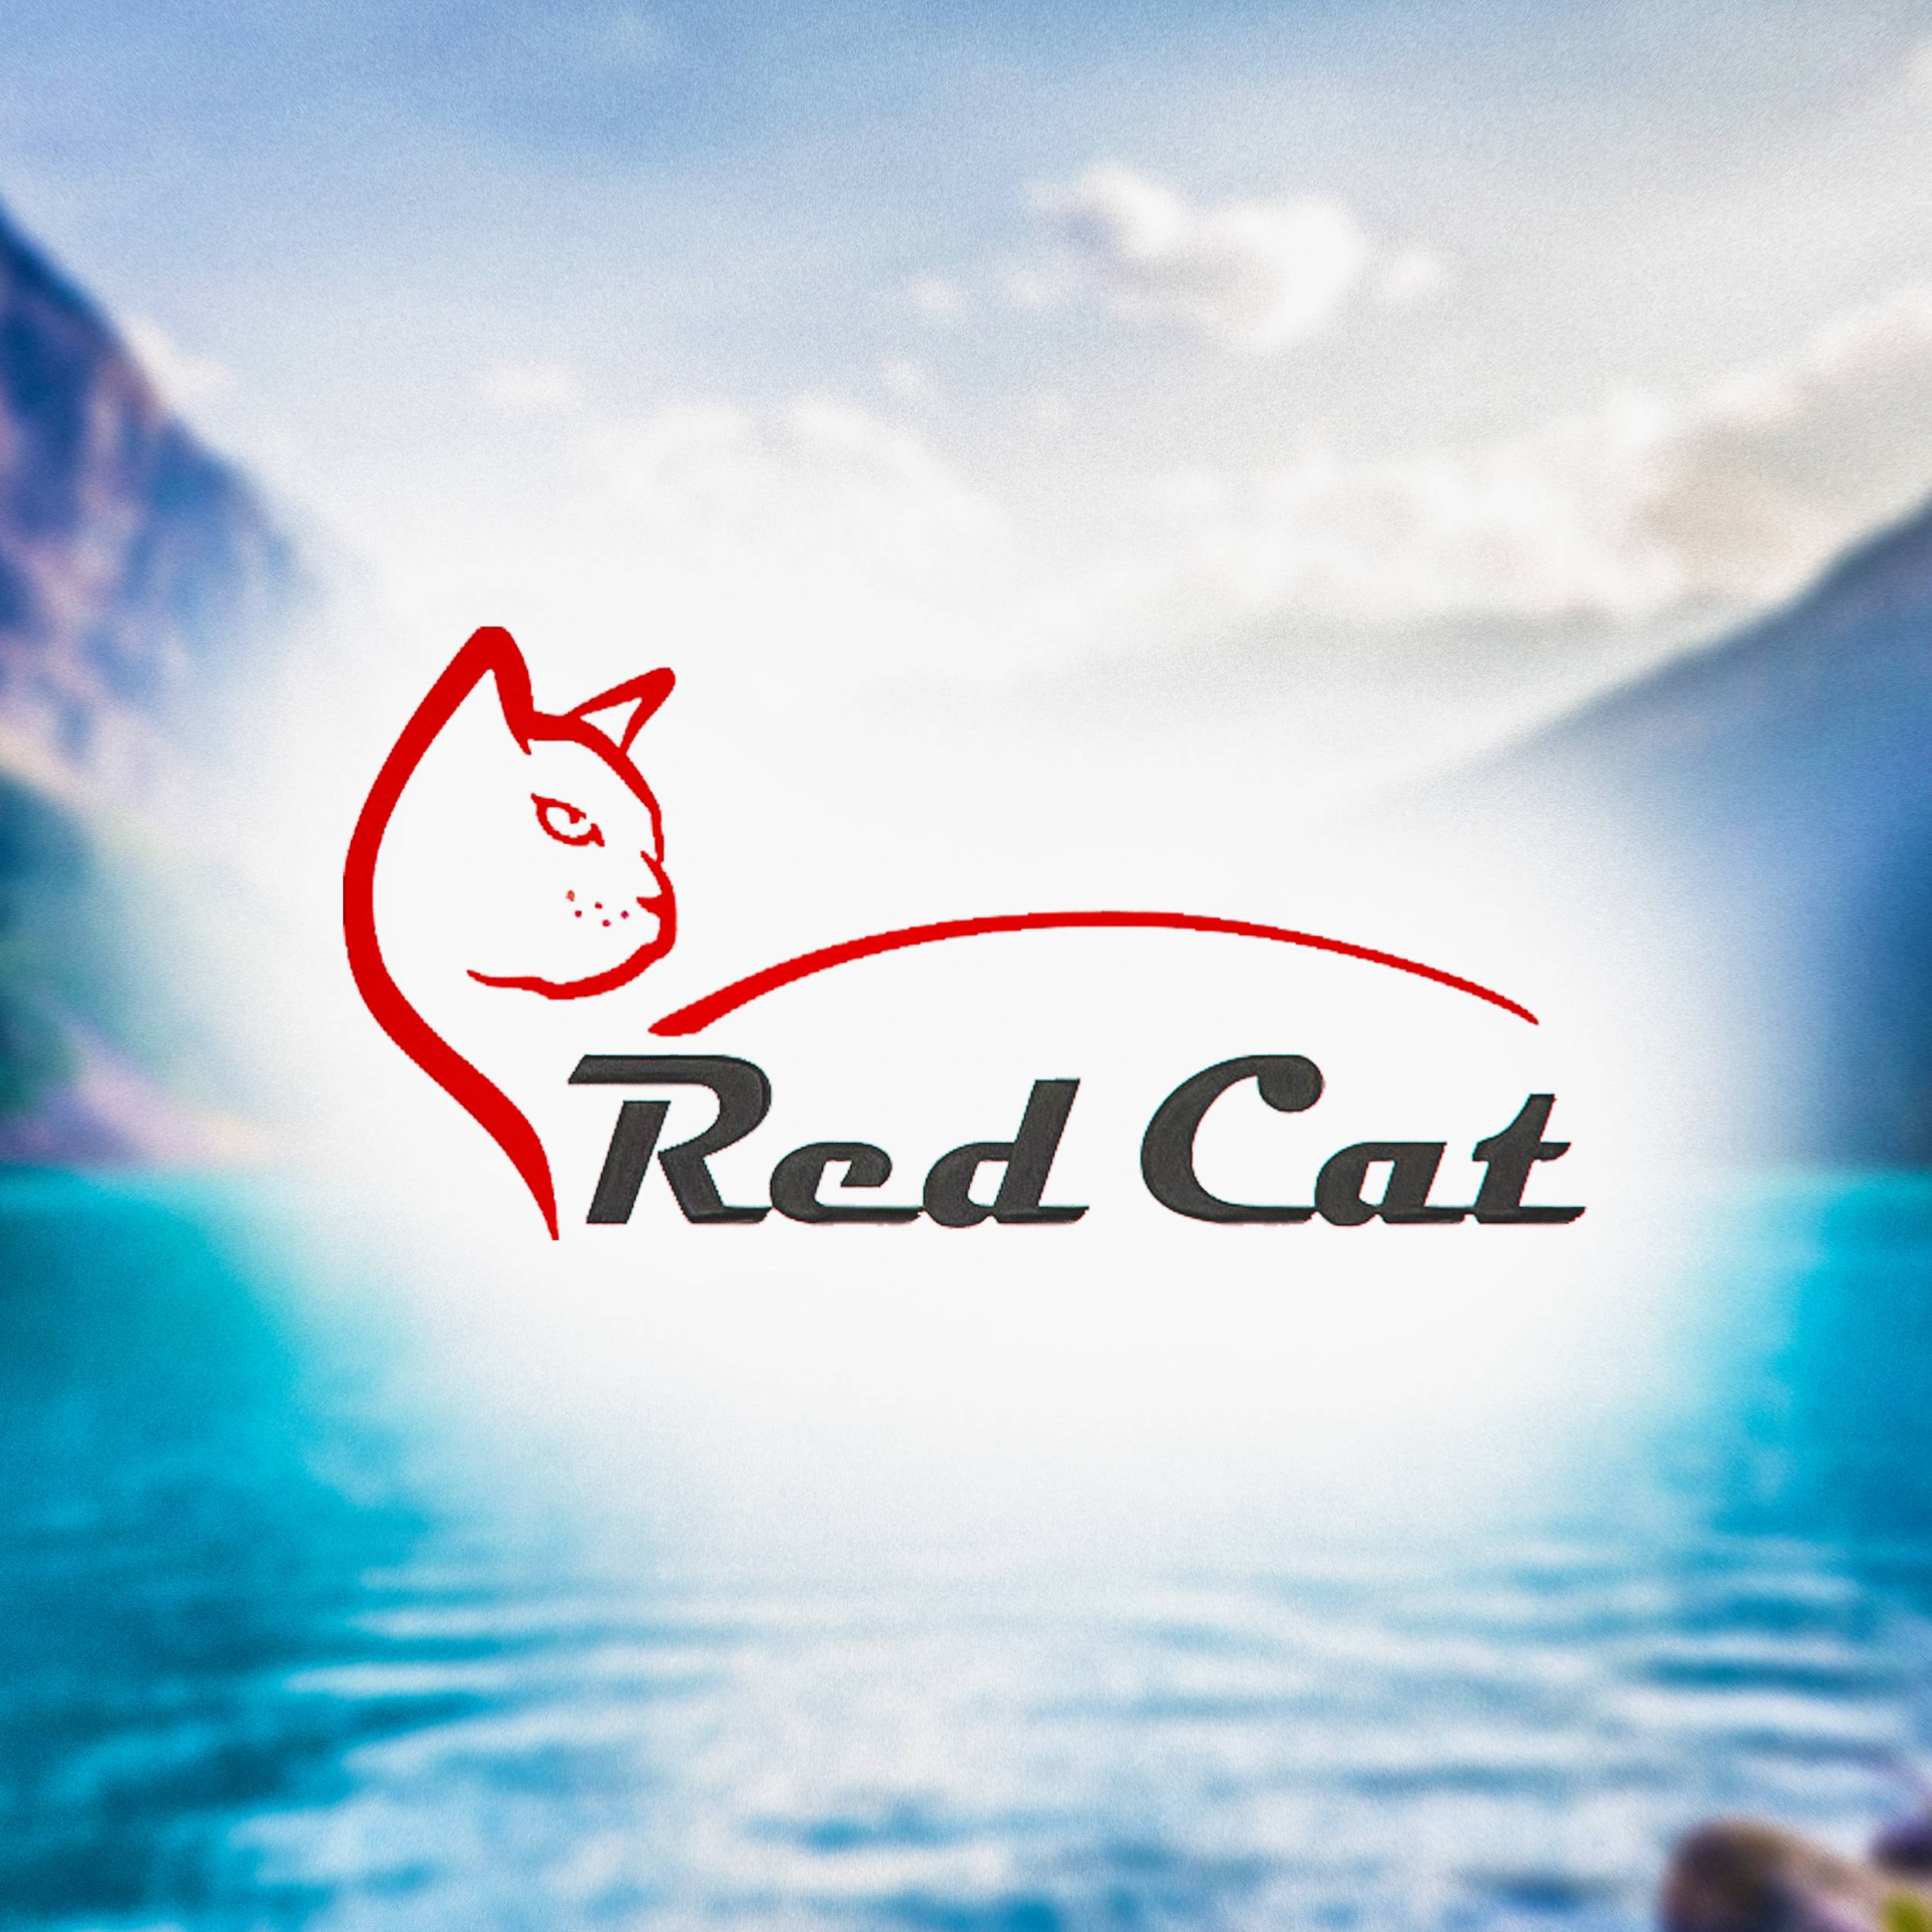 Включи red cat 2. Студия Red Cat. Red Cat магазин. Red Cat логотип. Ред Кэт Эверест.